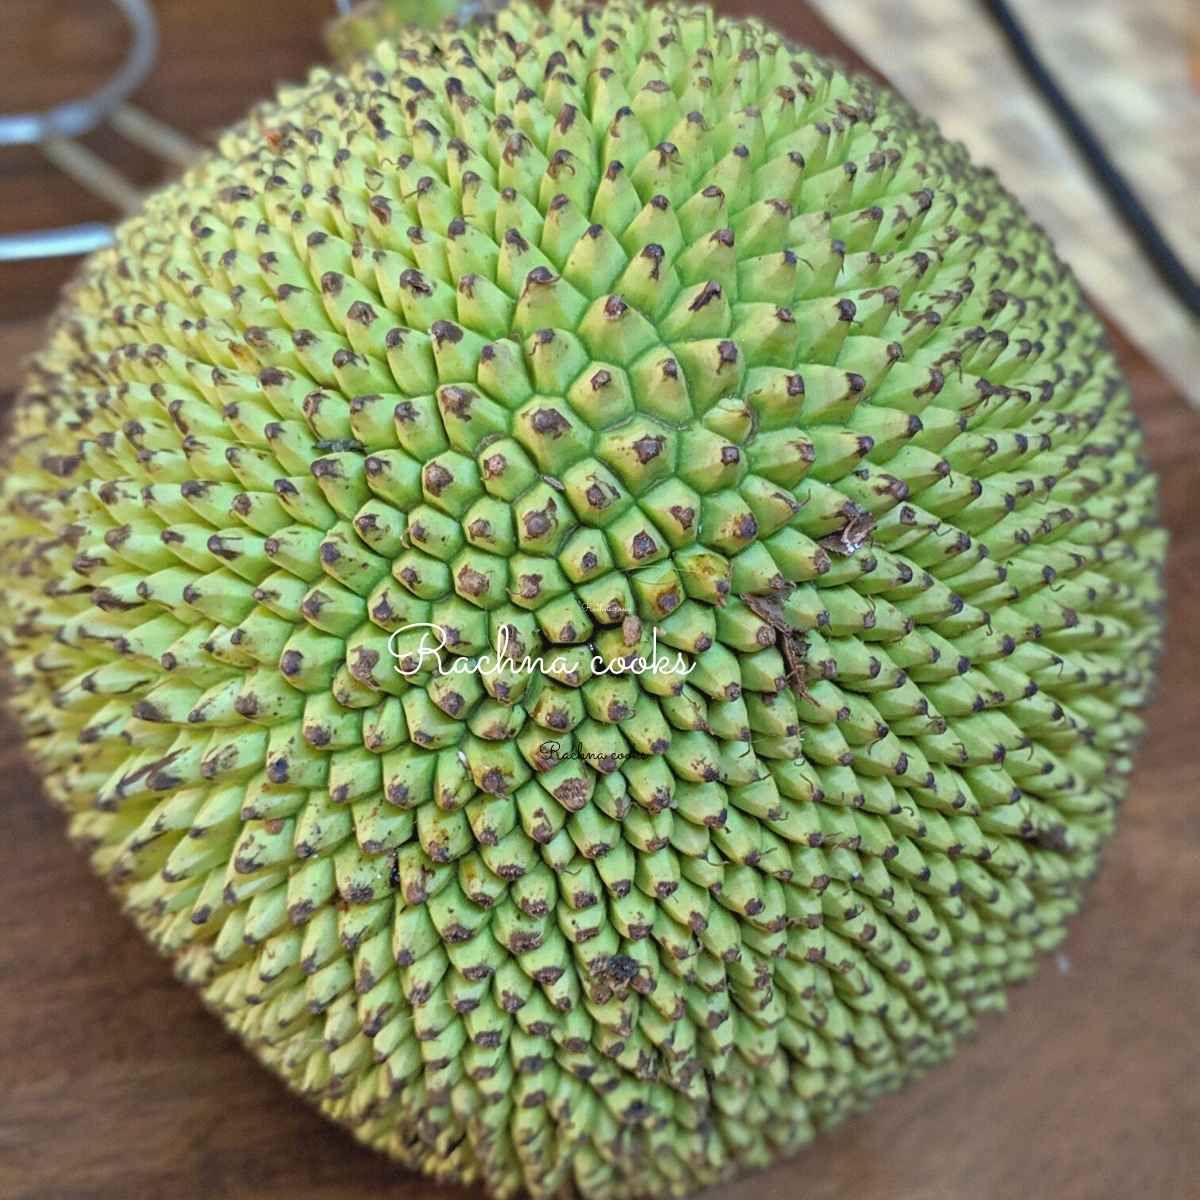 A round green jackfruit with spiky skin